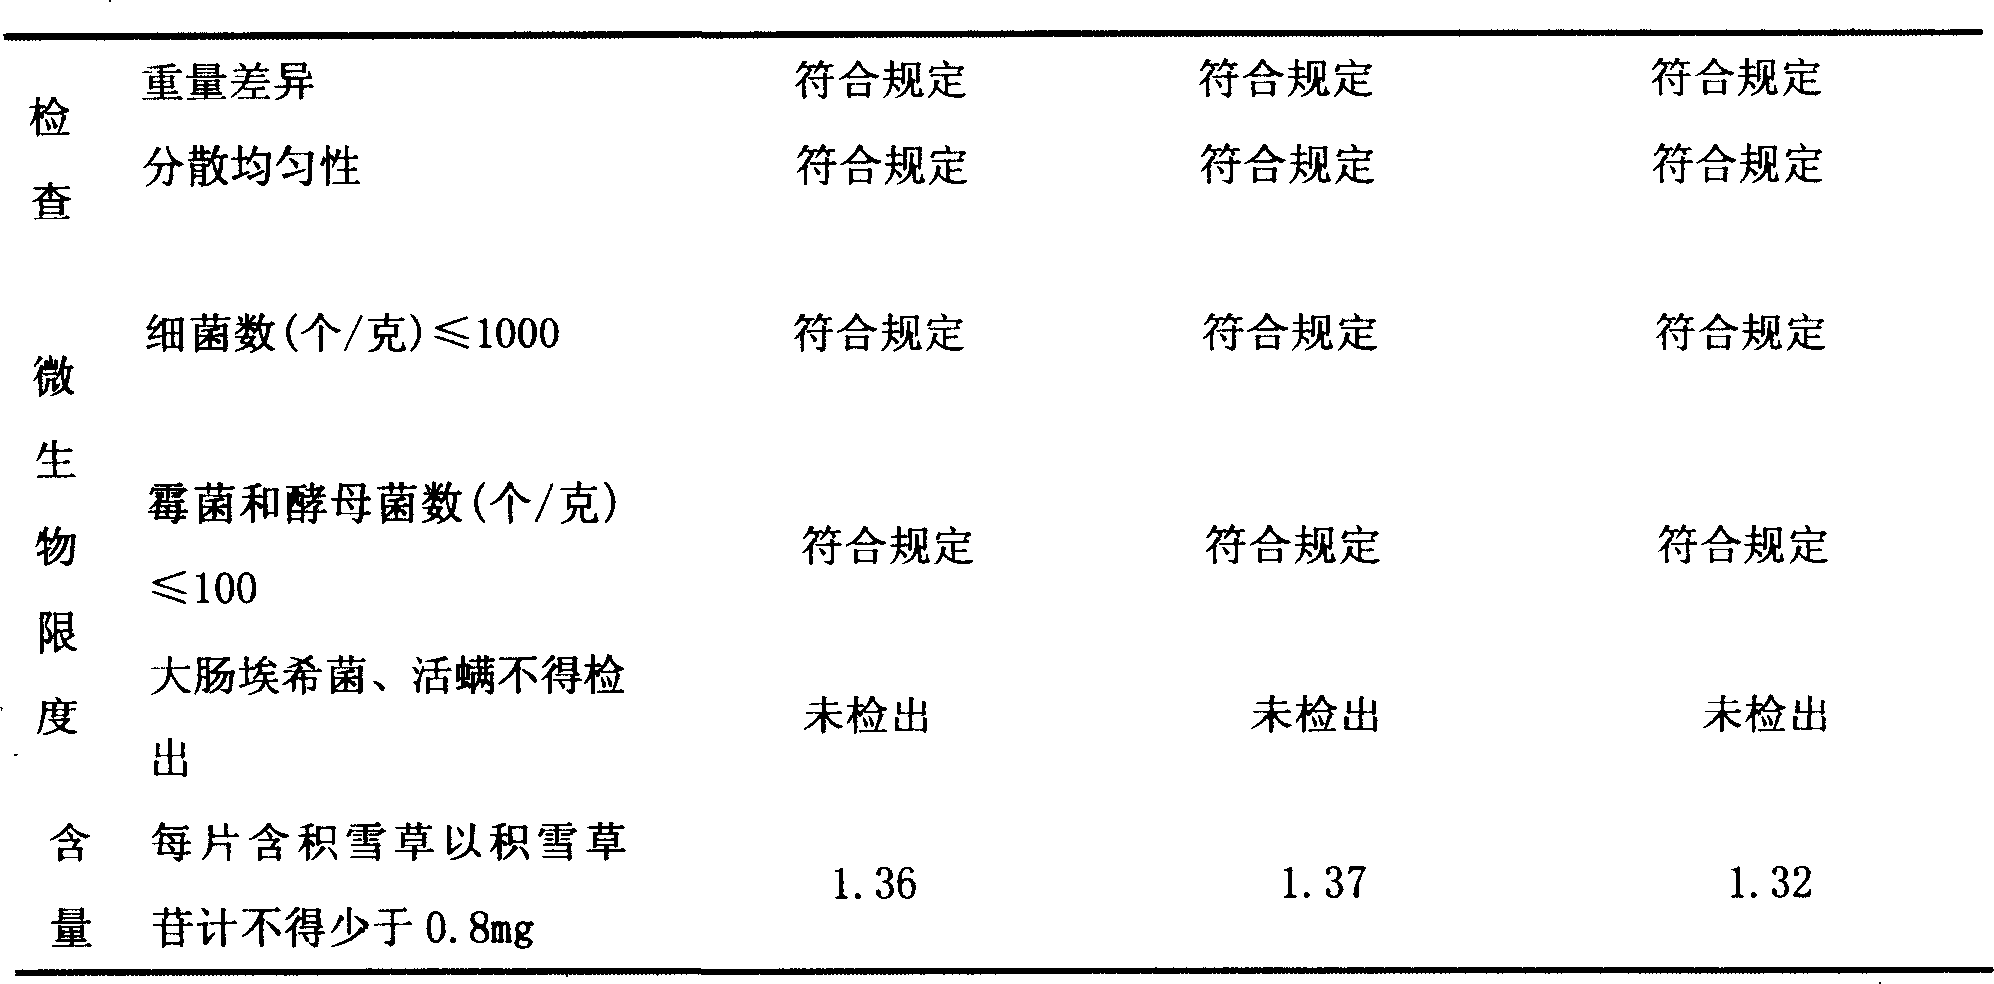 A preparation method of 'Sanjin' dispersible tablets